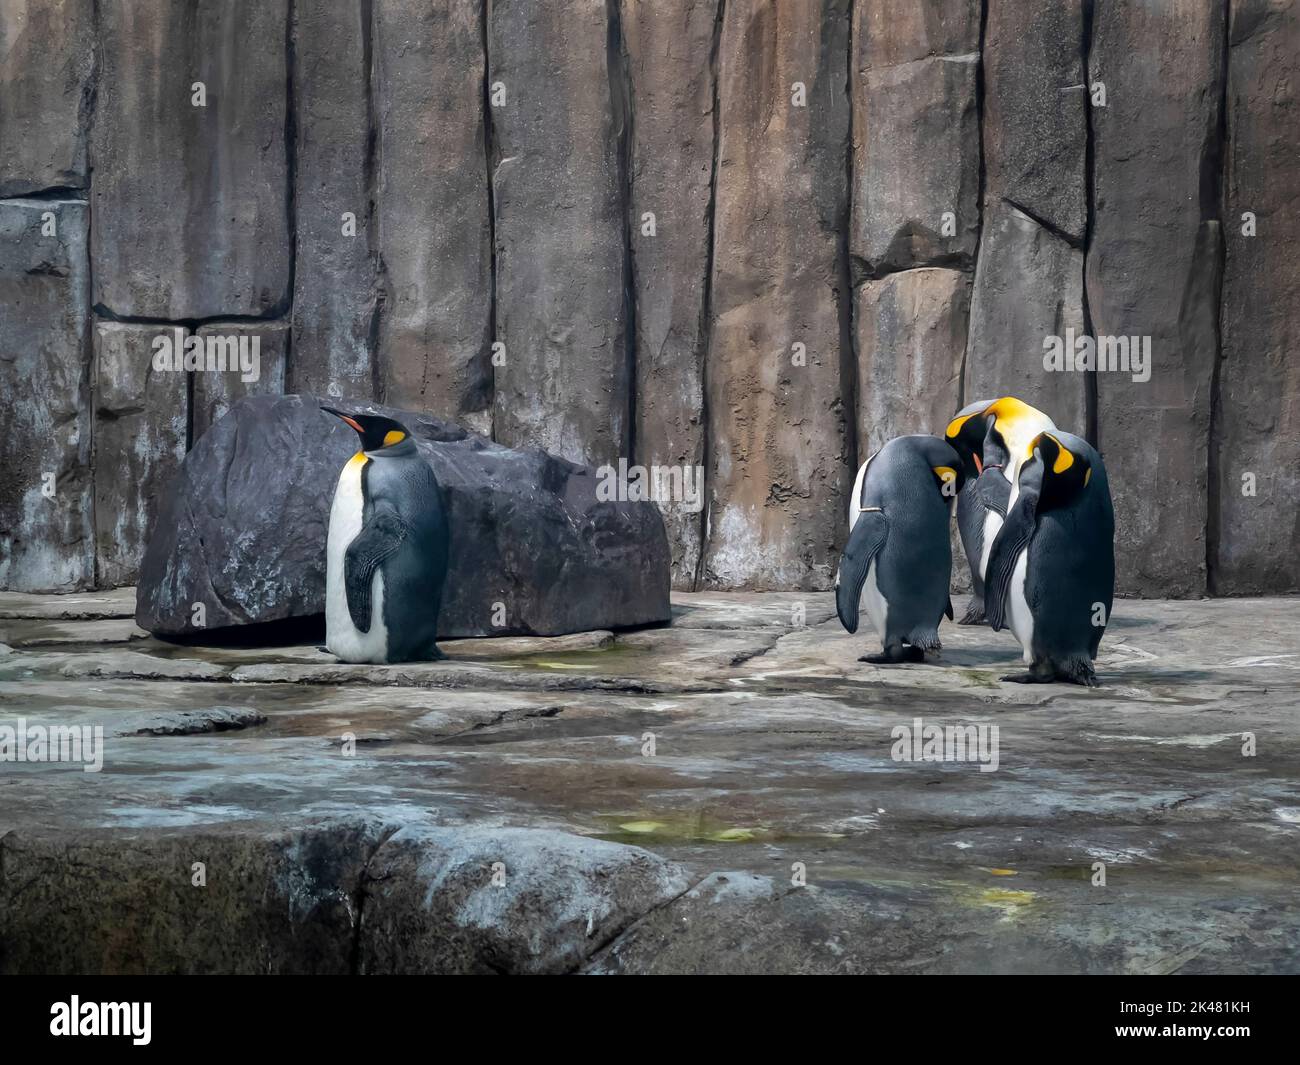 Emperor penguins (Aptenodytes forsteri) on display at Montreal Biodome Stock Photo